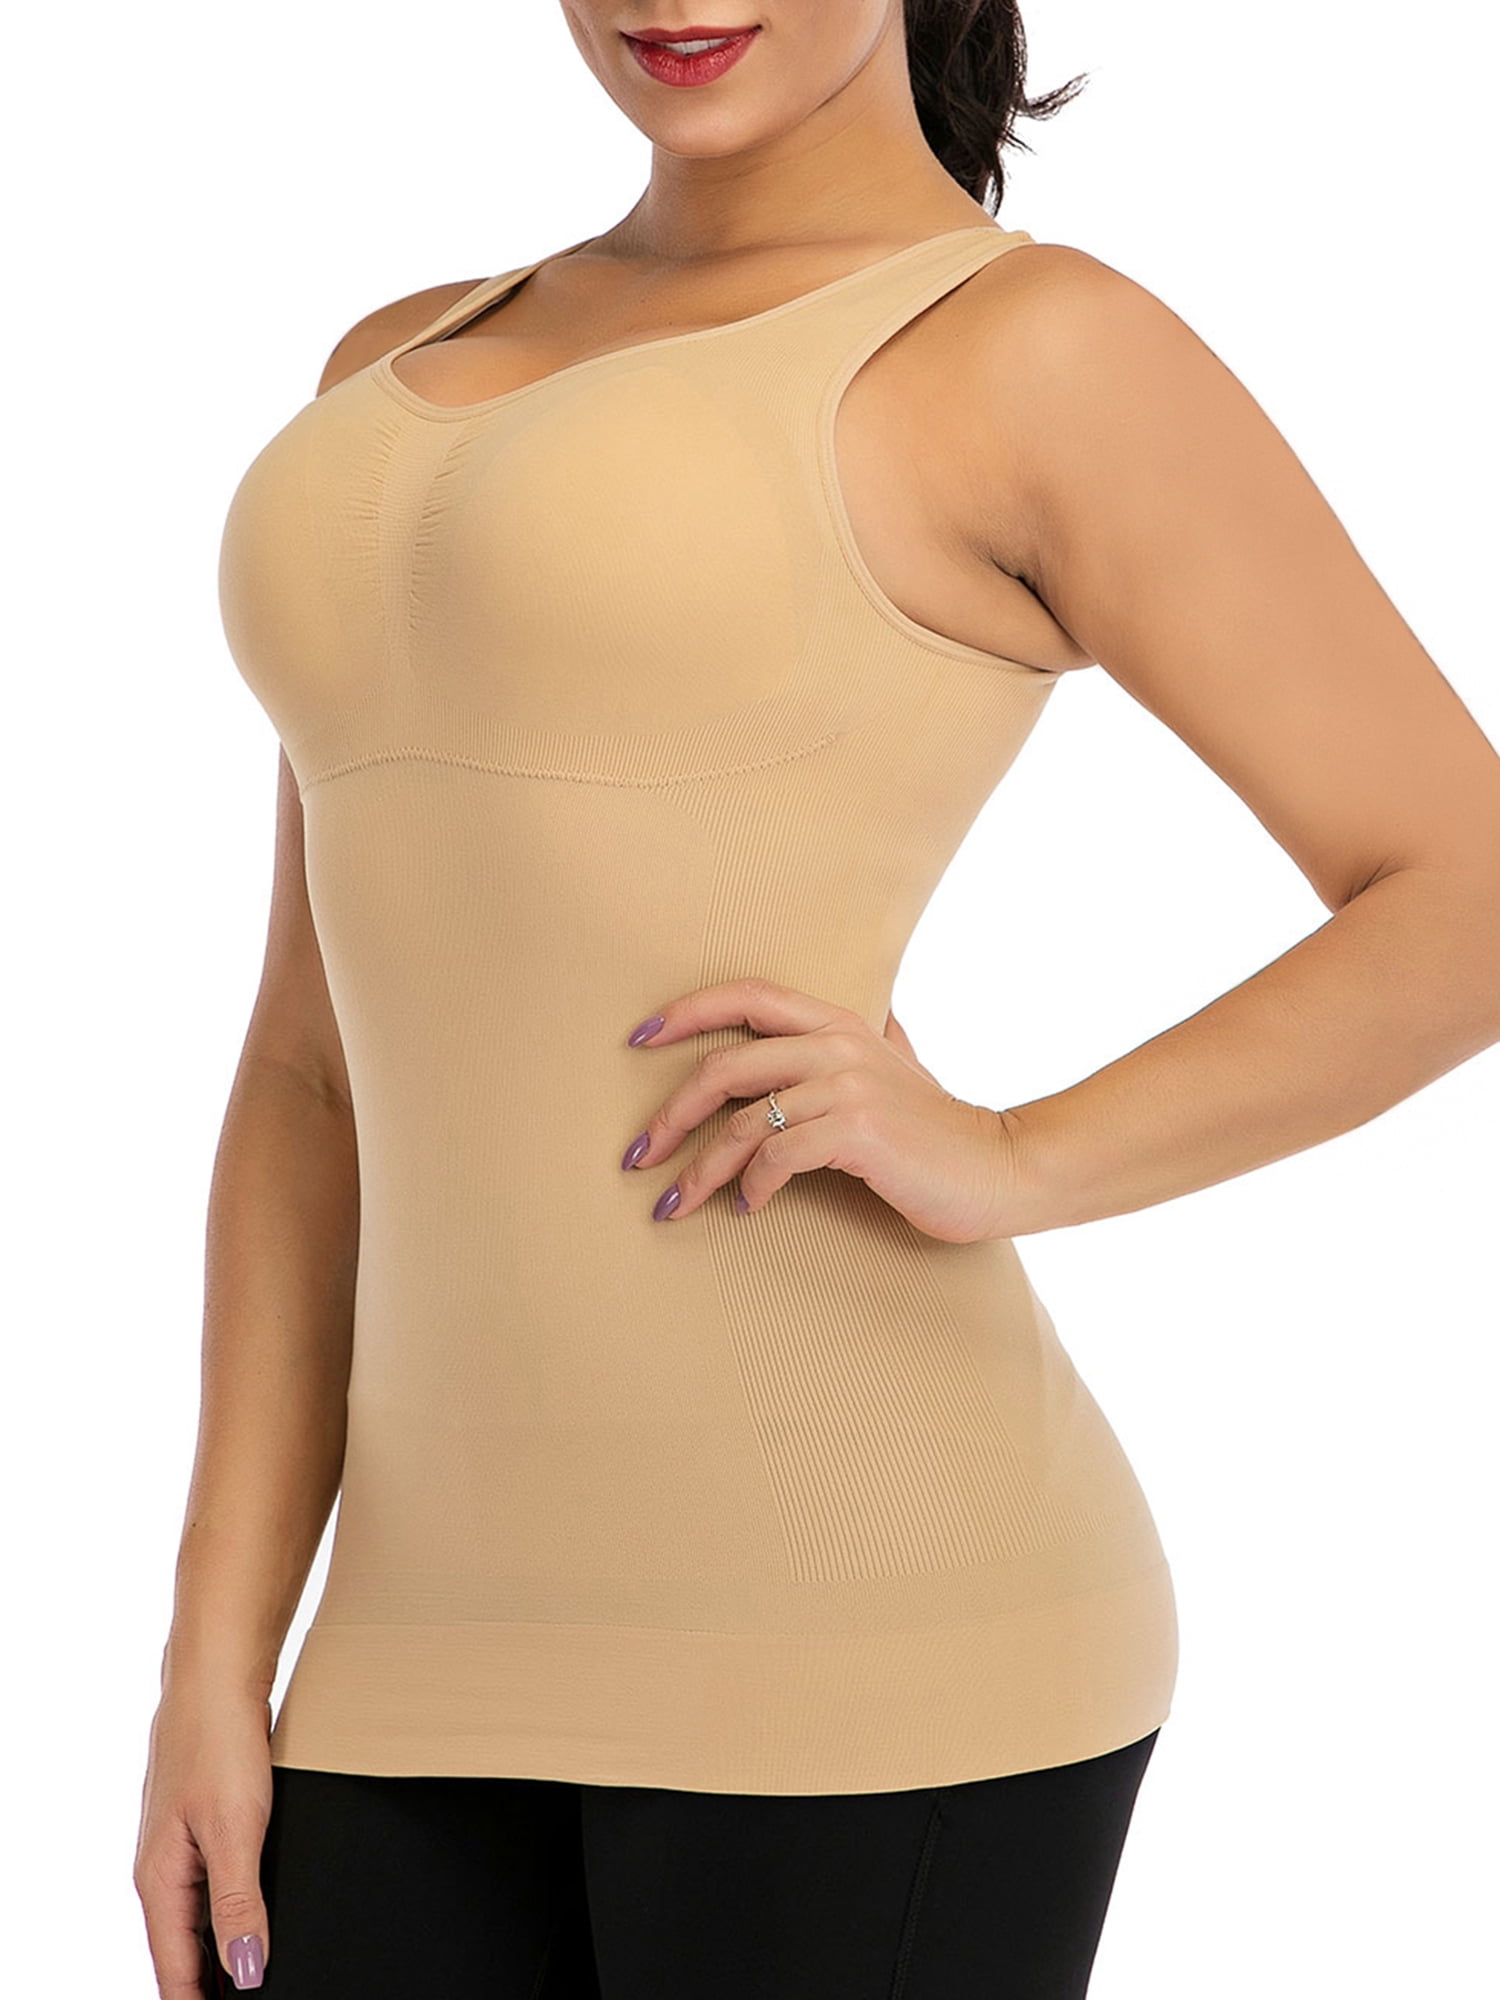 FUTATA Women's Shapewear Tank Top Built in Bra Slimming Tank Top Shapewear  Tummy Control Camisole Cami Shaper Top